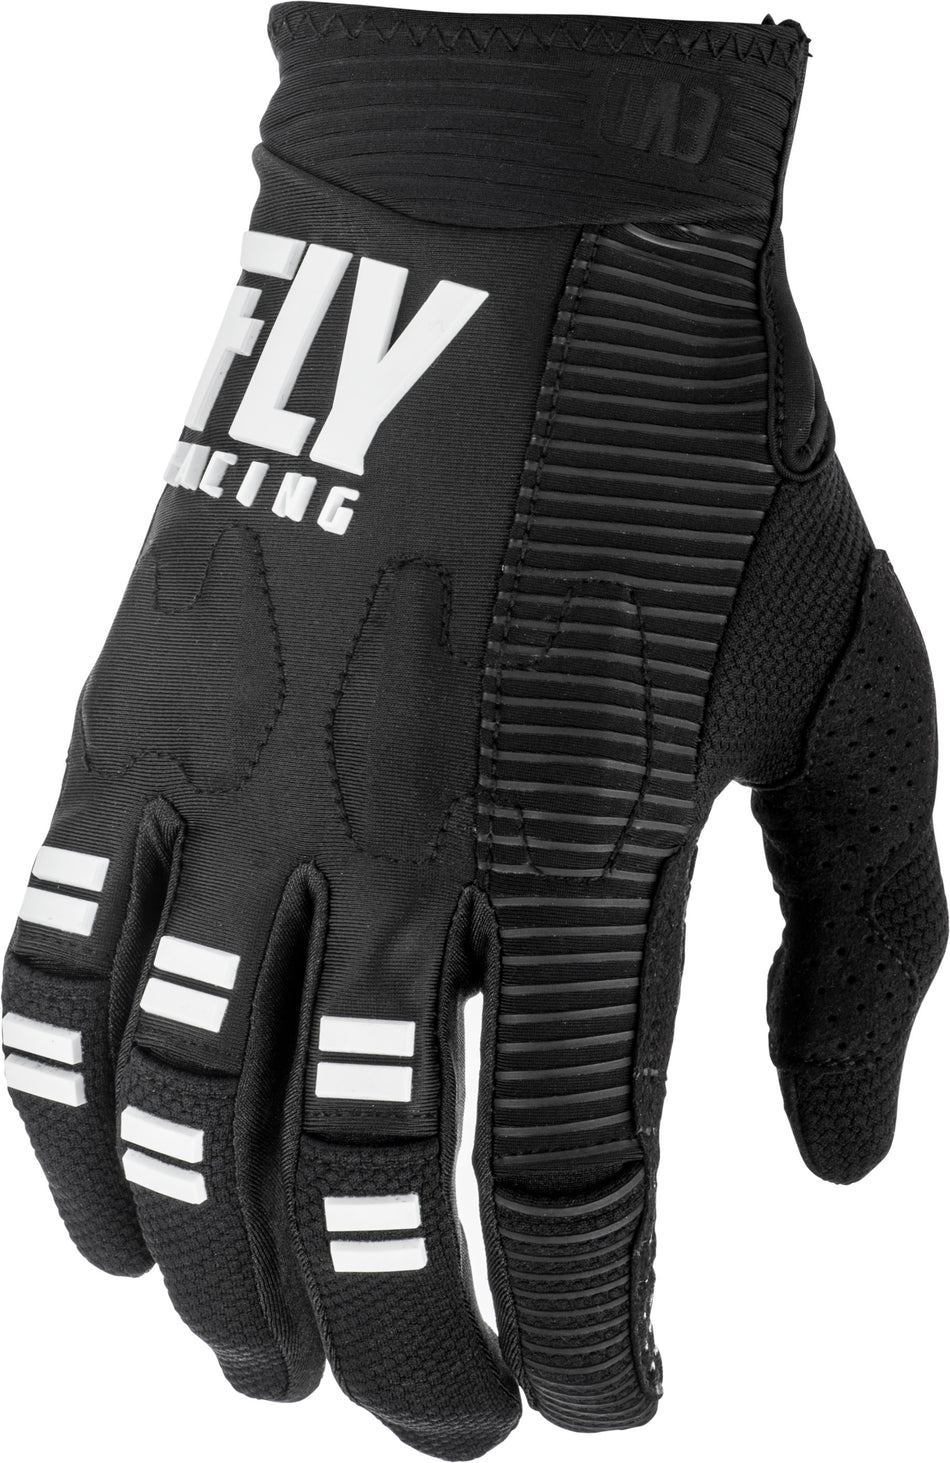 FLY RACING Evolution Dst Gloves Black/White Sz 11 372-11011